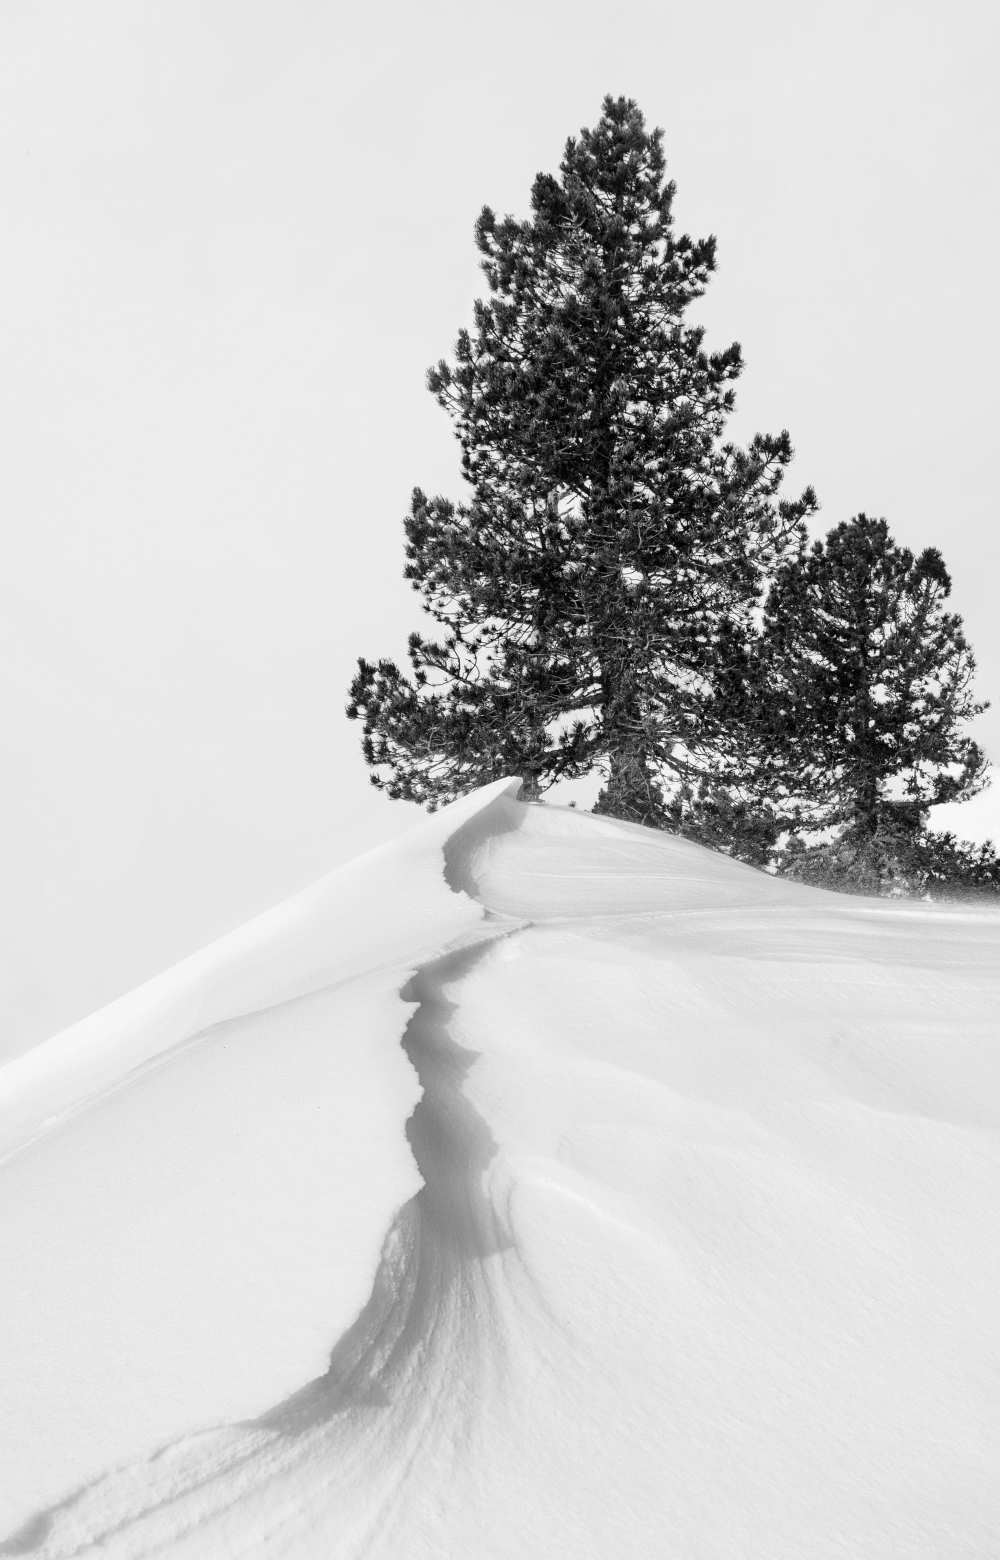 About the snow and forms von Rodrigo Núñez Buj